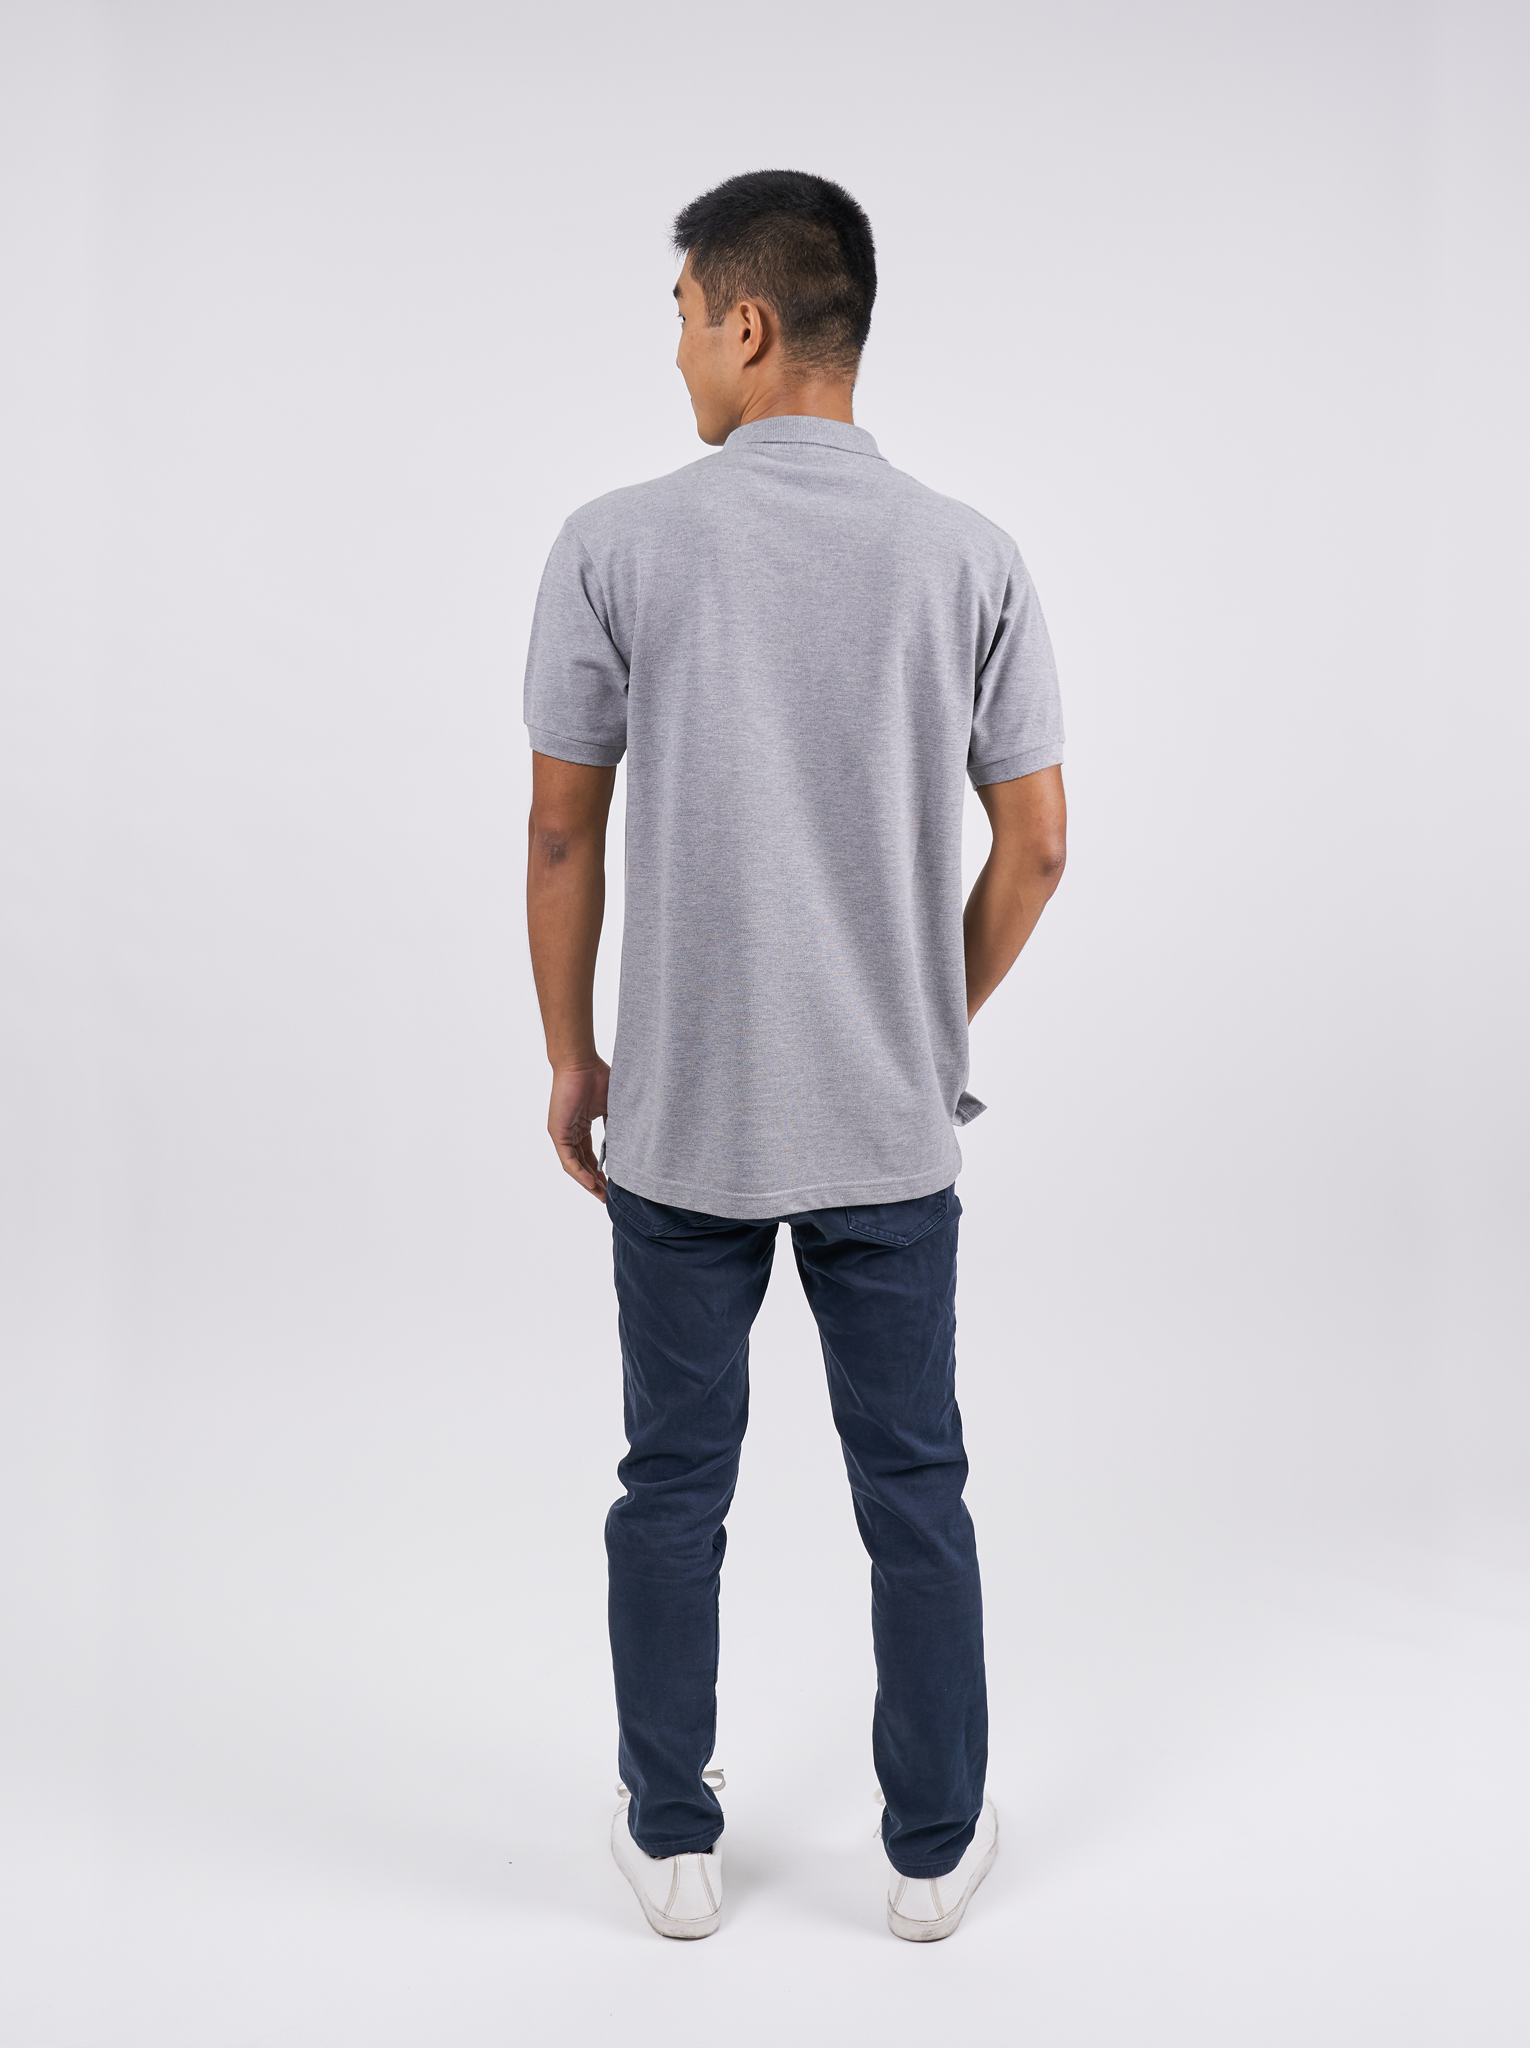 Polo Shirt เสื้อโปโล (Grey, สีเทา)(Unisex)